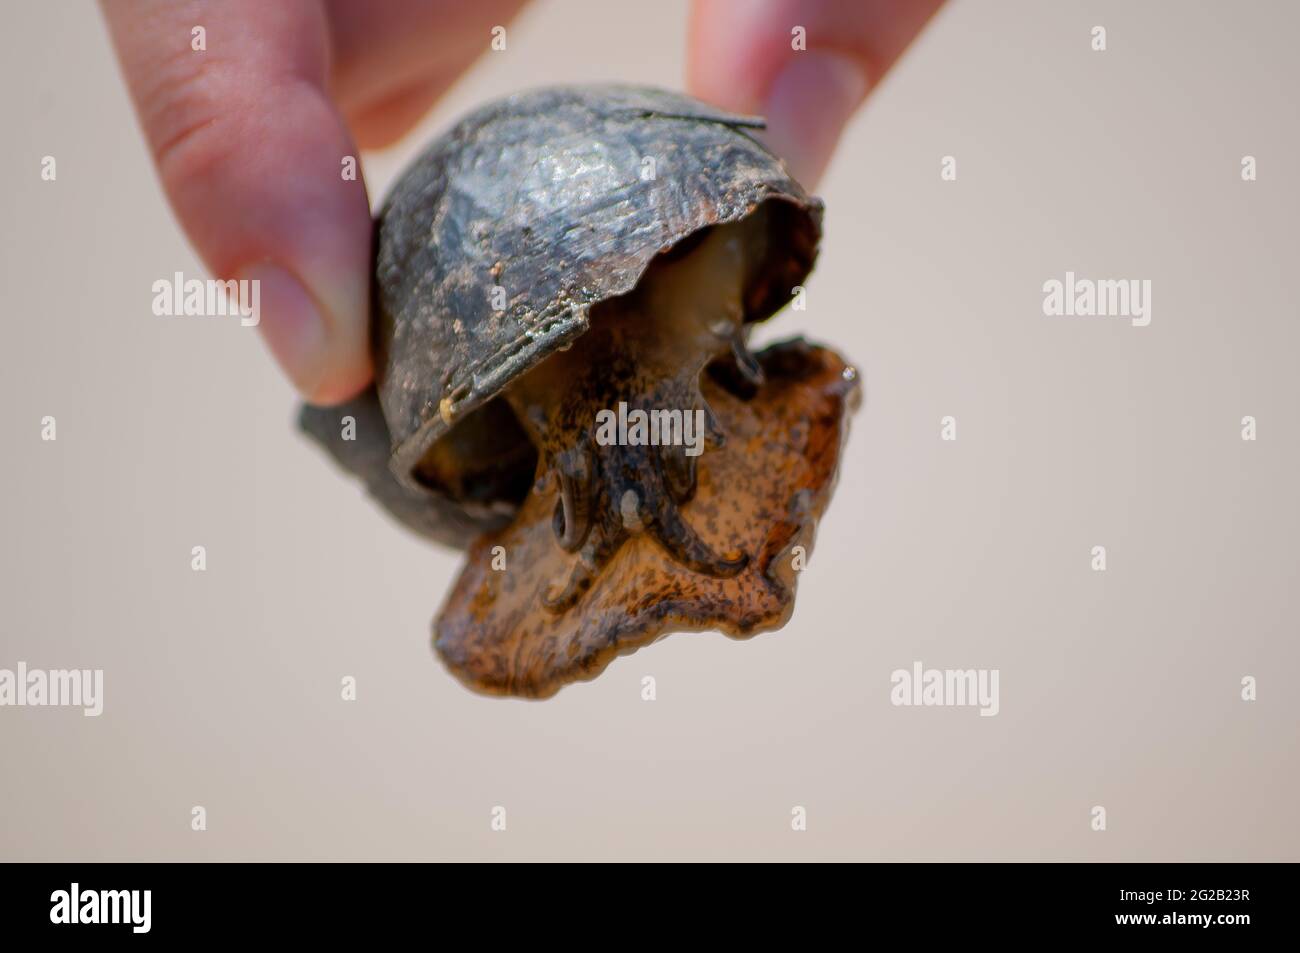 Selective focus shot of fingers holding an apple snail in Ebro Delta, Tarragona, Spain Stock Photo